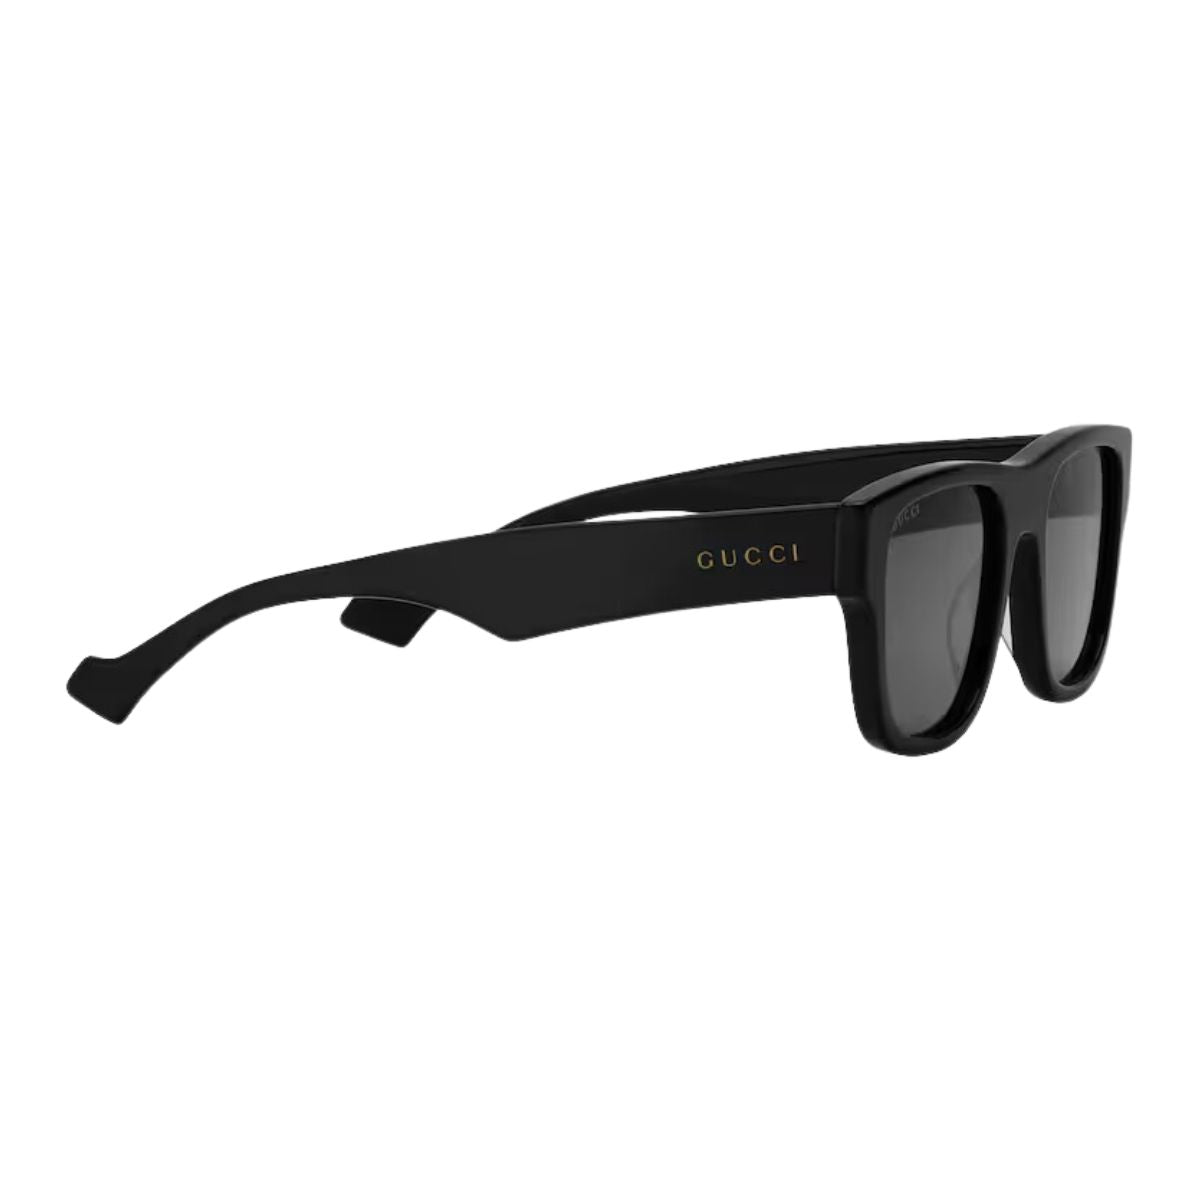 "Shop Trendy Gucci Square Polarized Sunglasses For Mens At Optorium"